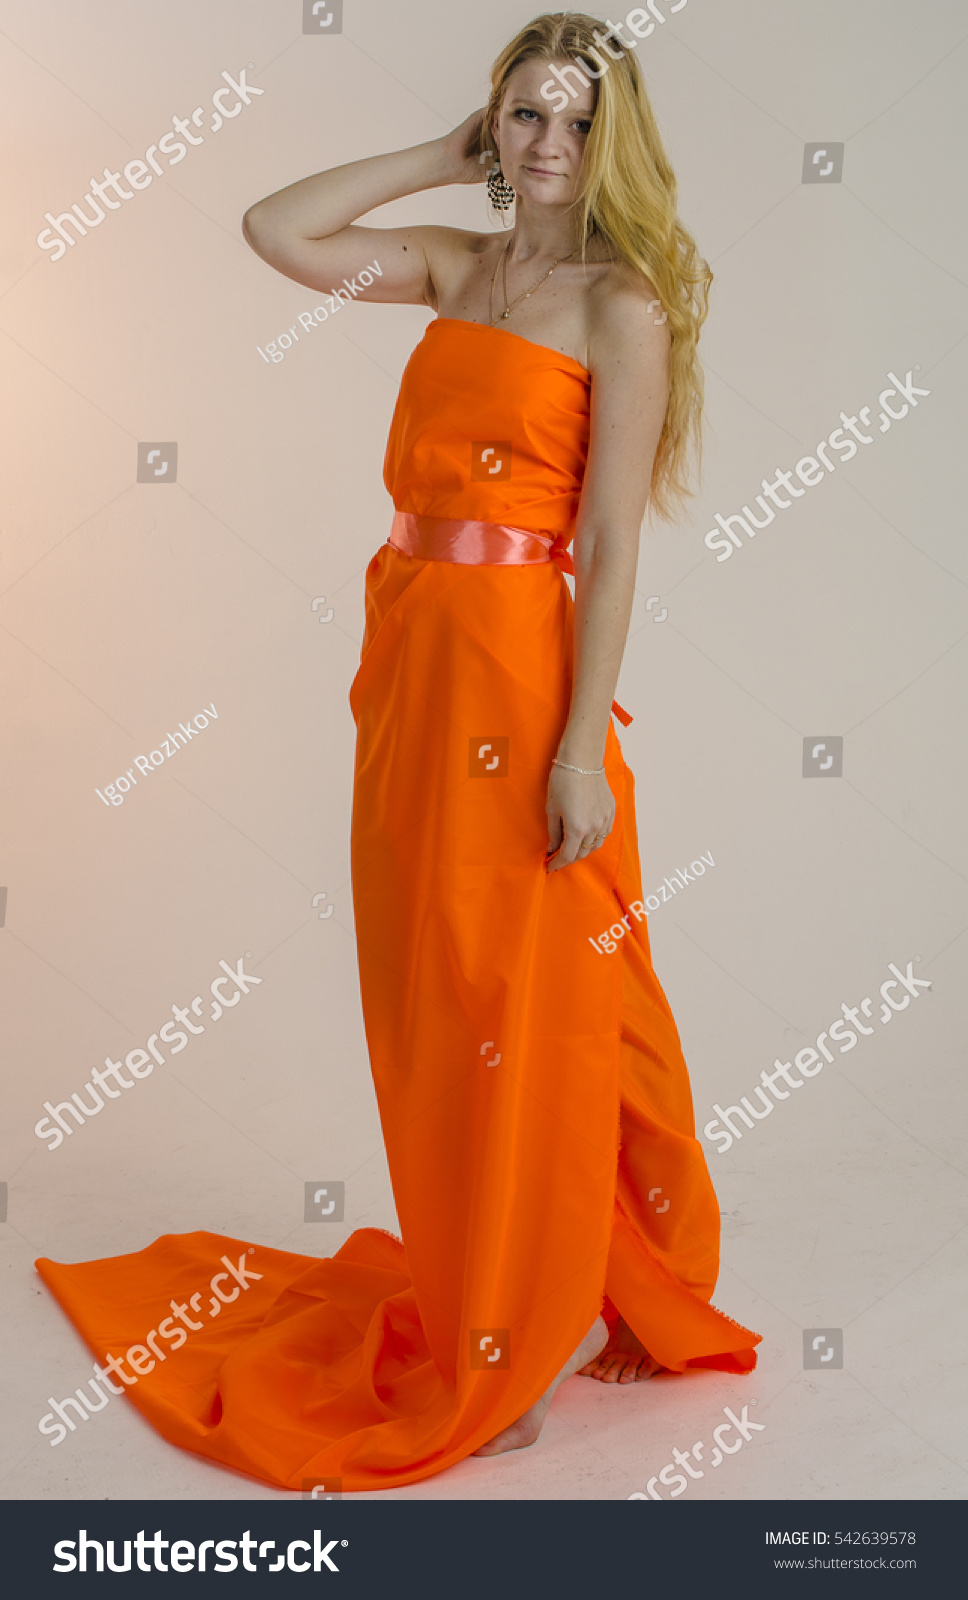 Orange dressed blonde